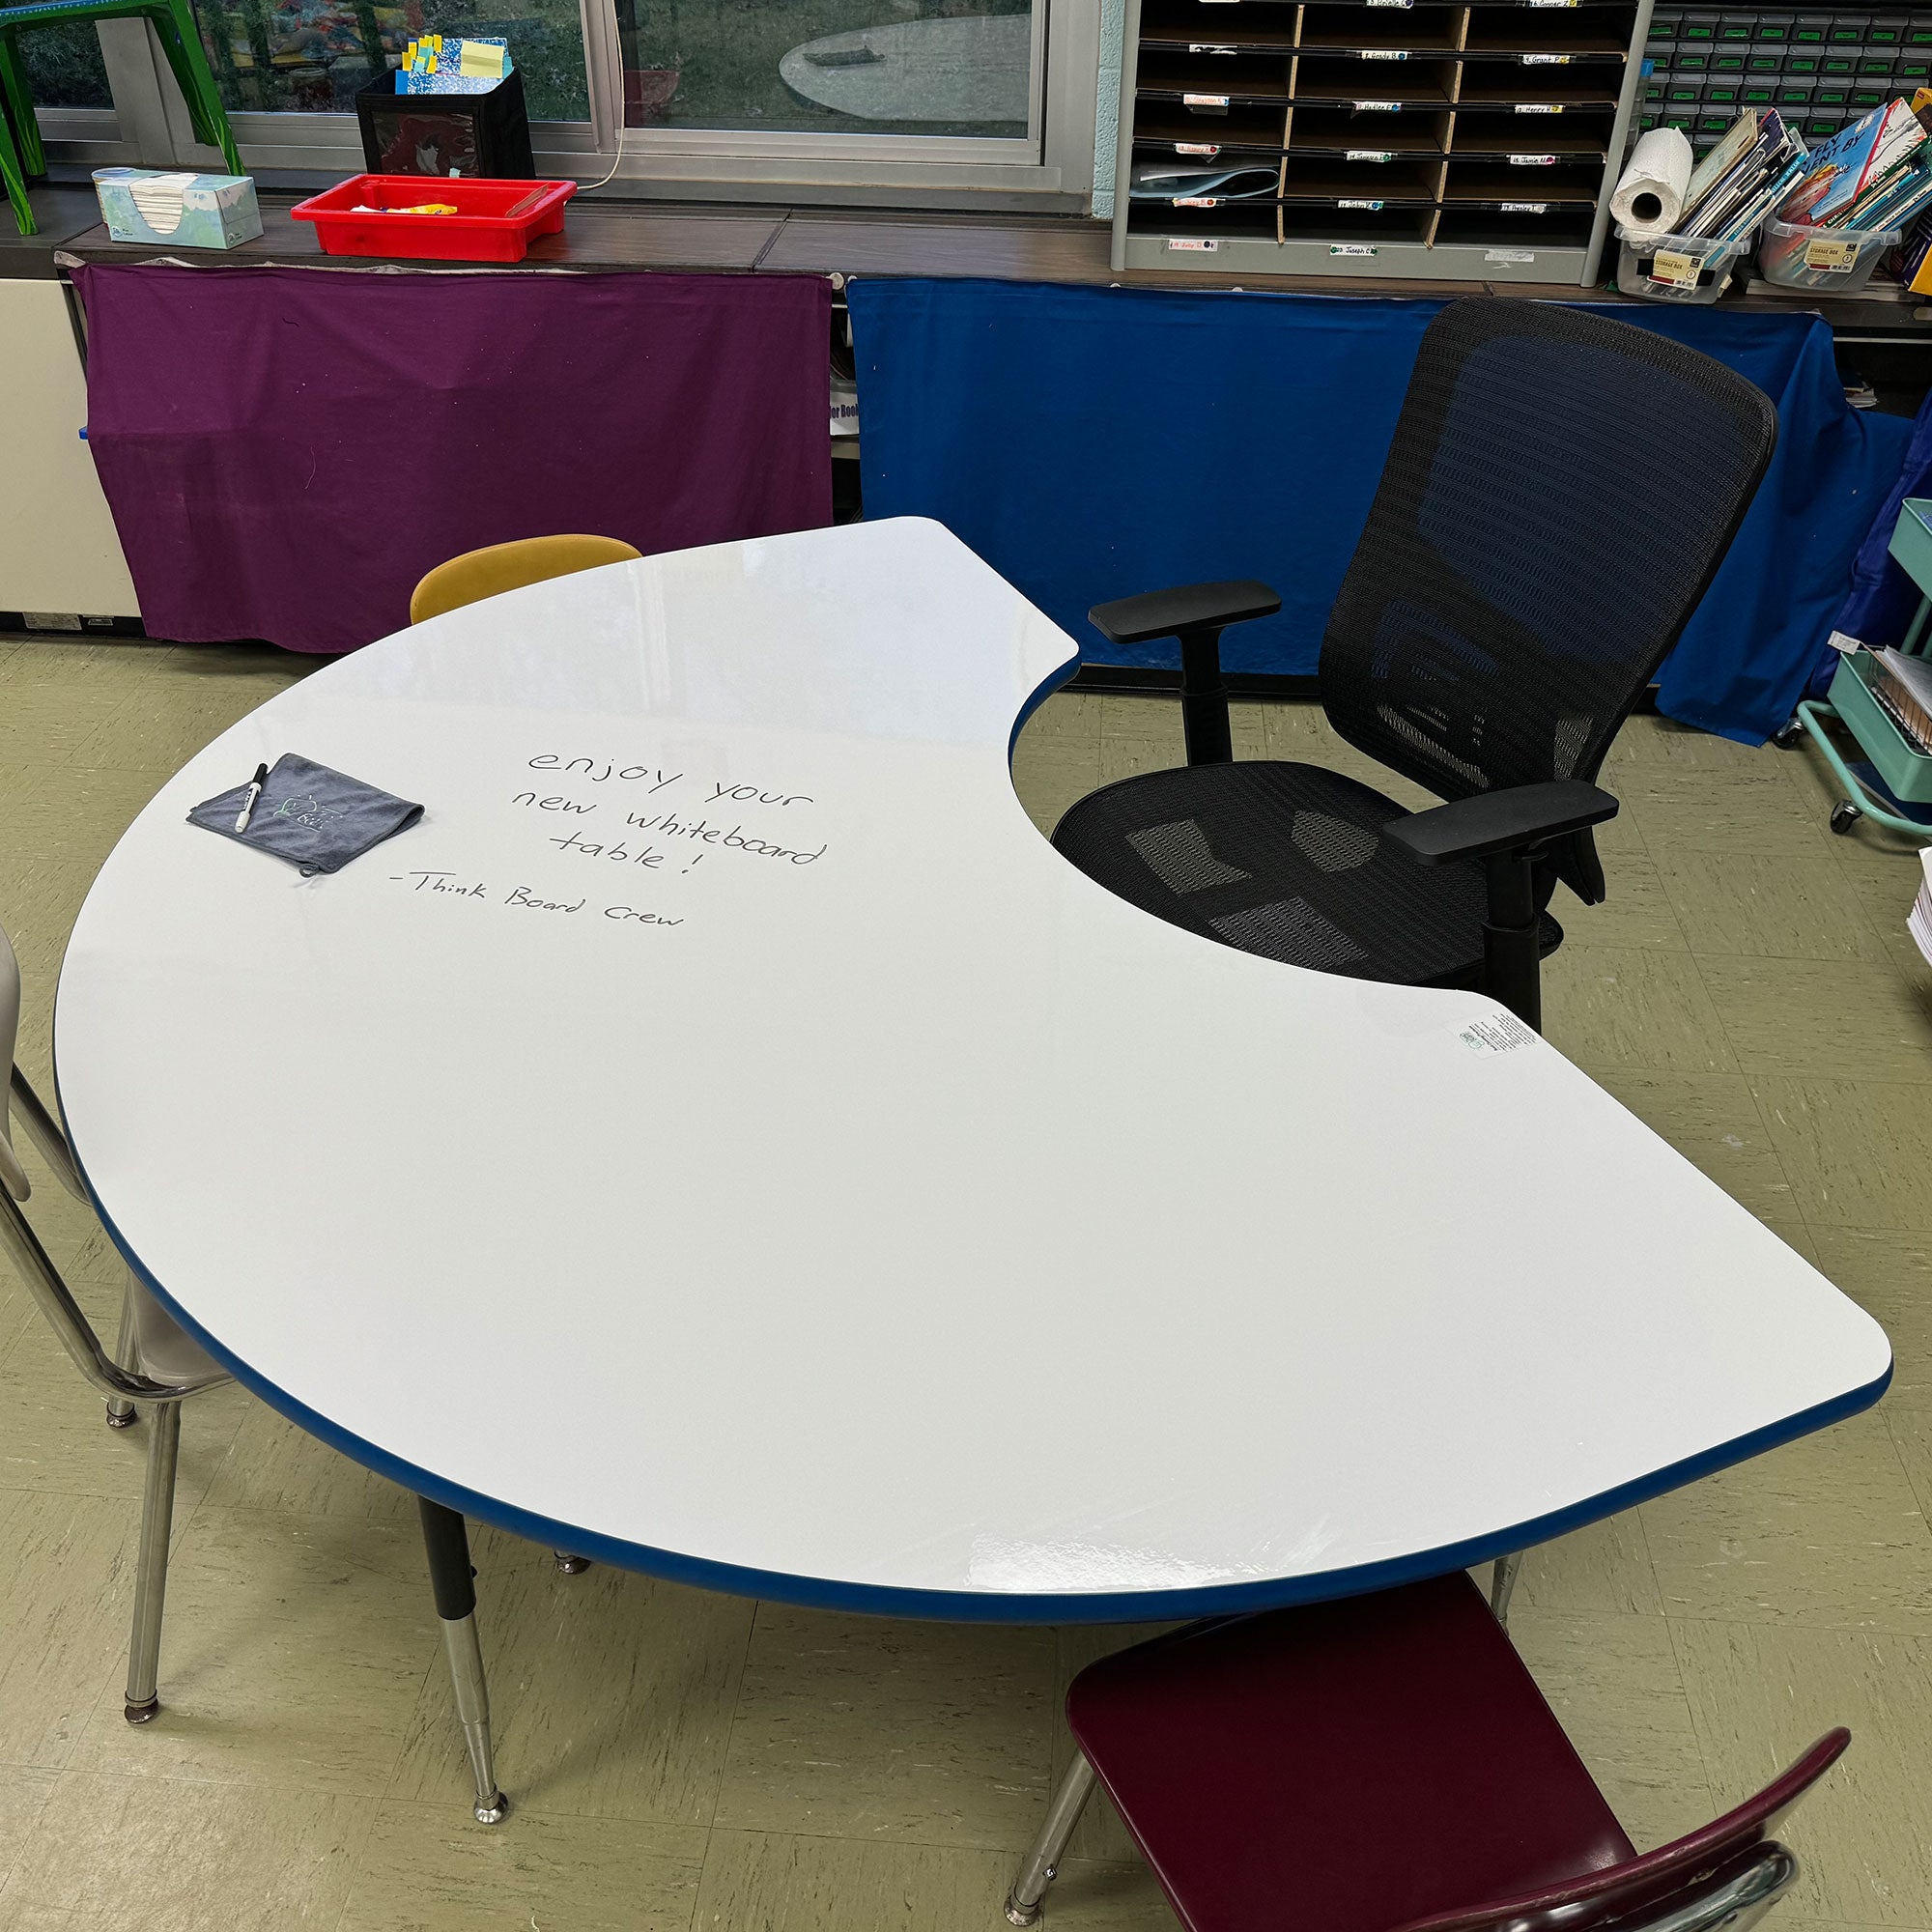 whiteboard table in a classroom ballston spa